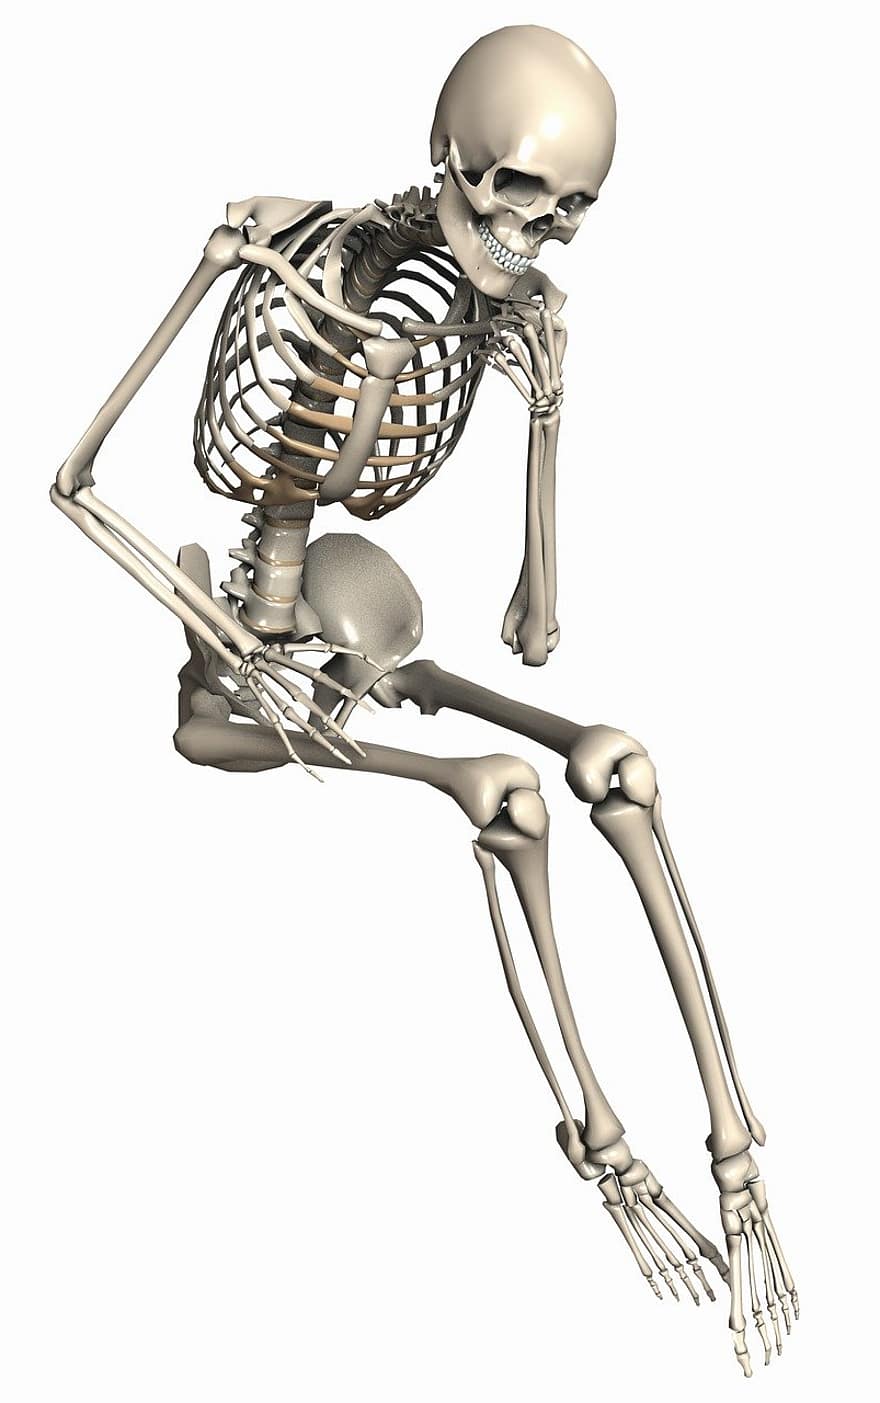 kerangka, duduk, wanita, endoskeleton, Kerangka Internal, tulang, seni digital, 3d, pose, berpose, Visualisasi 3d